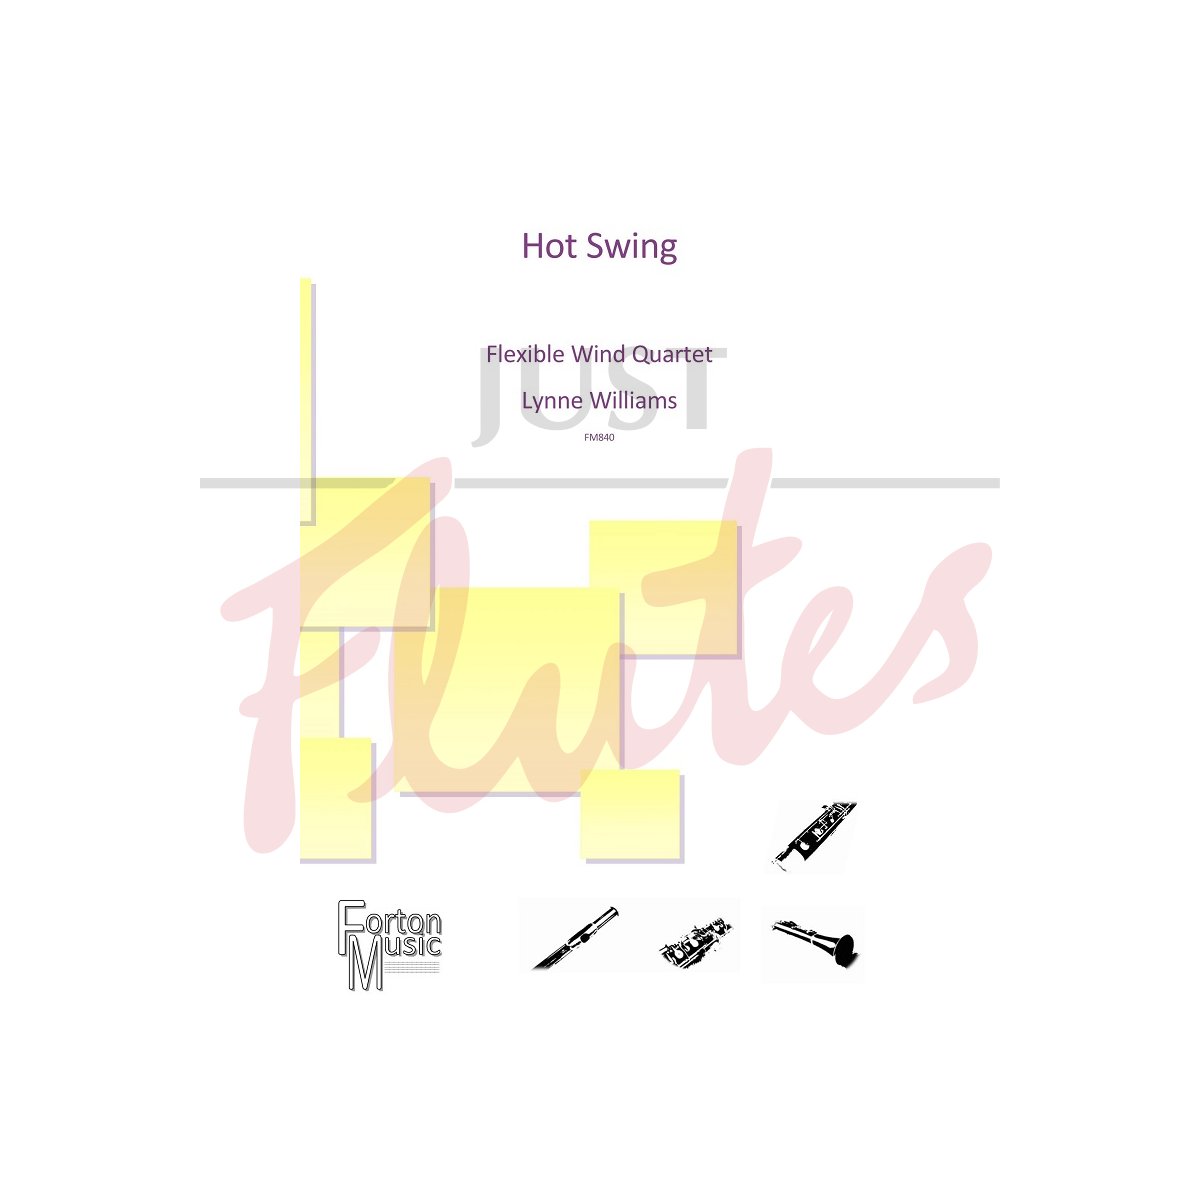 Hot Swing [Flexible Wind Quartet]